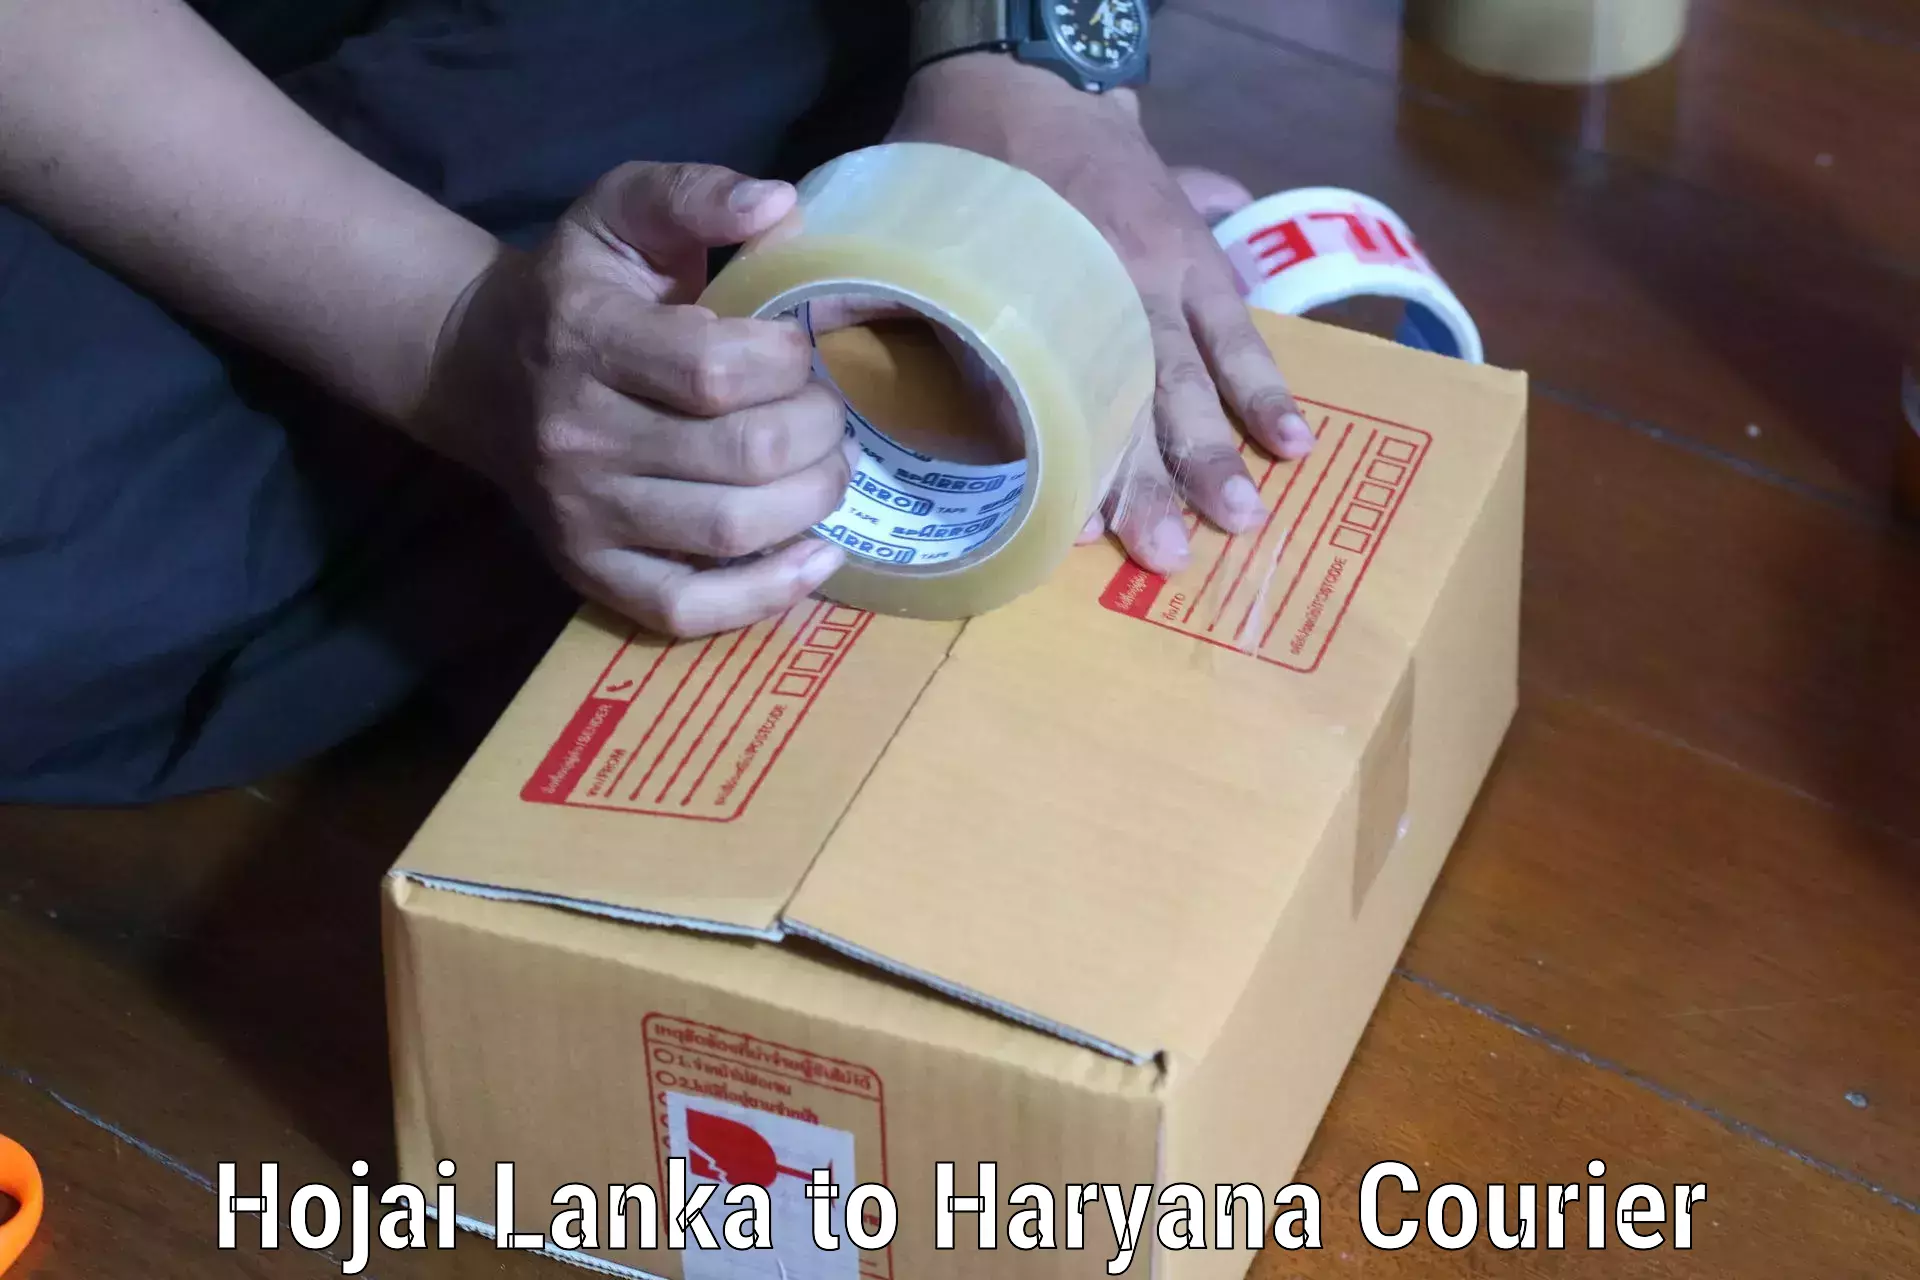 International parcel service Hojai Lanka to NCR Haryana